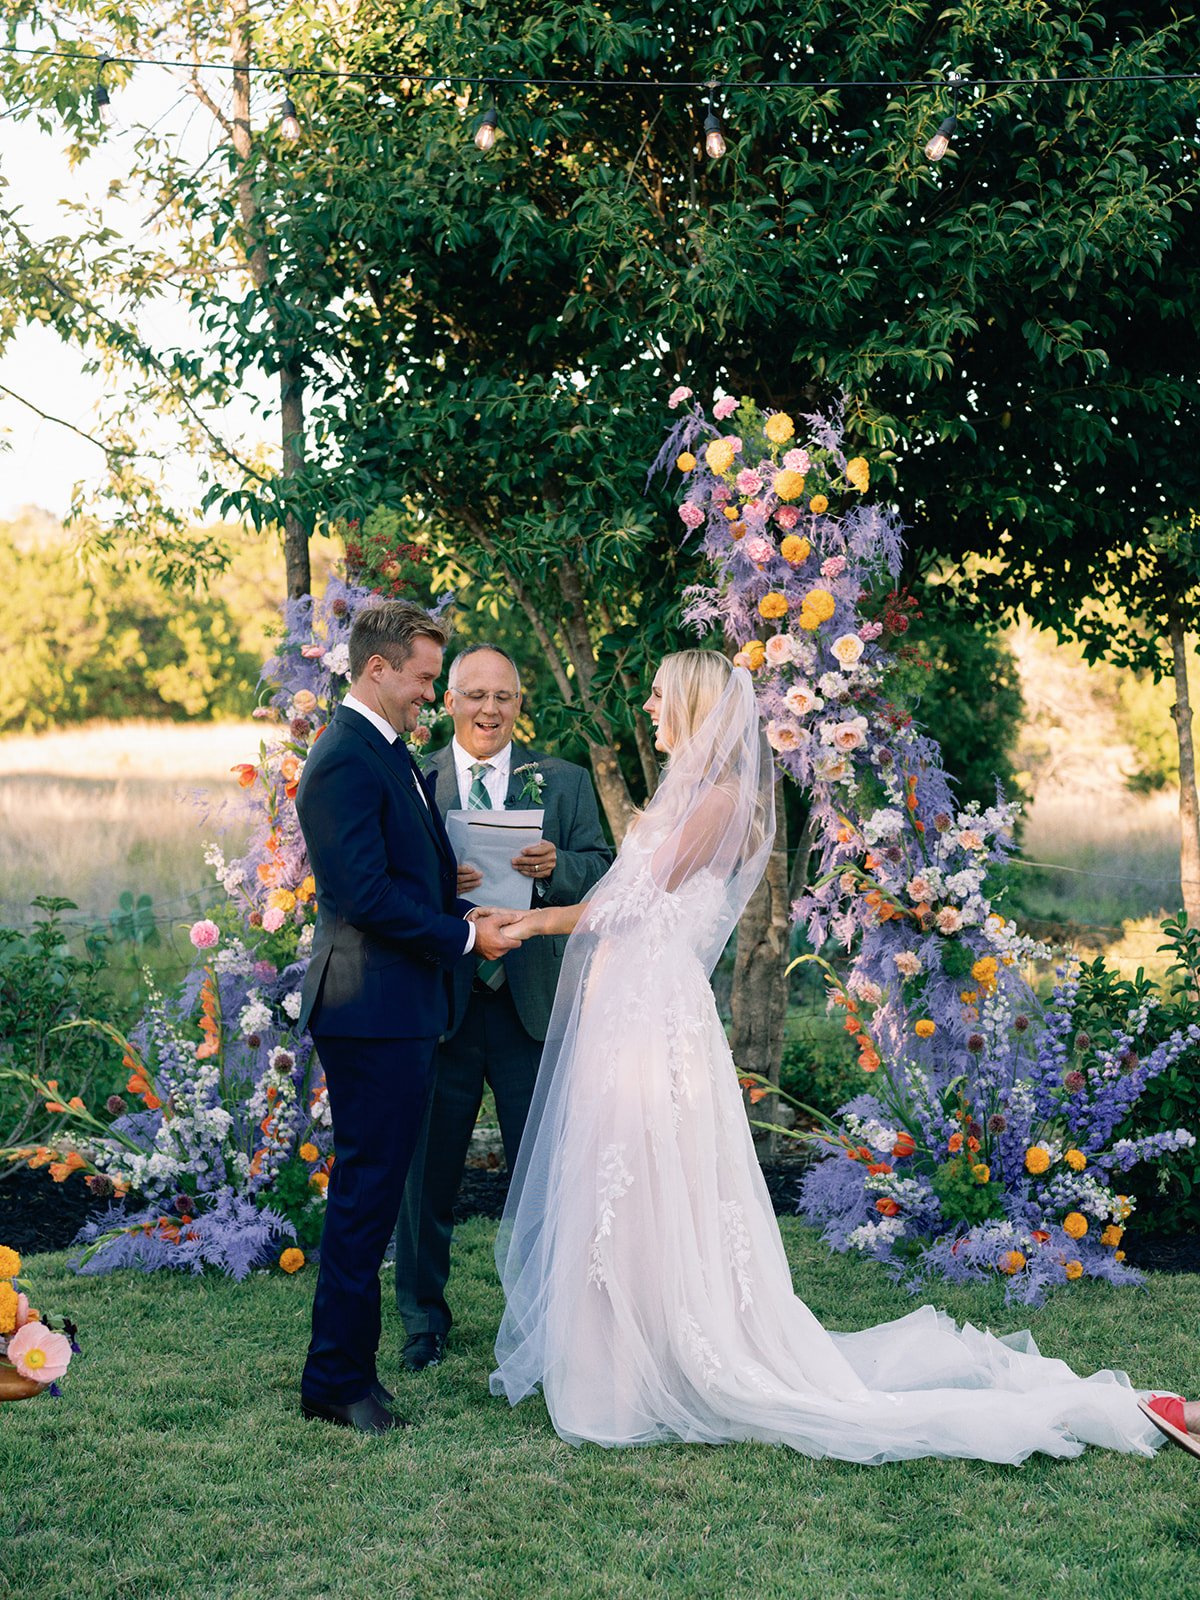 Best-Austin-Wedding-Photographers-Elopement-Film-35mm-Asheville-Santa-Barbara-Backyard-46.jpg